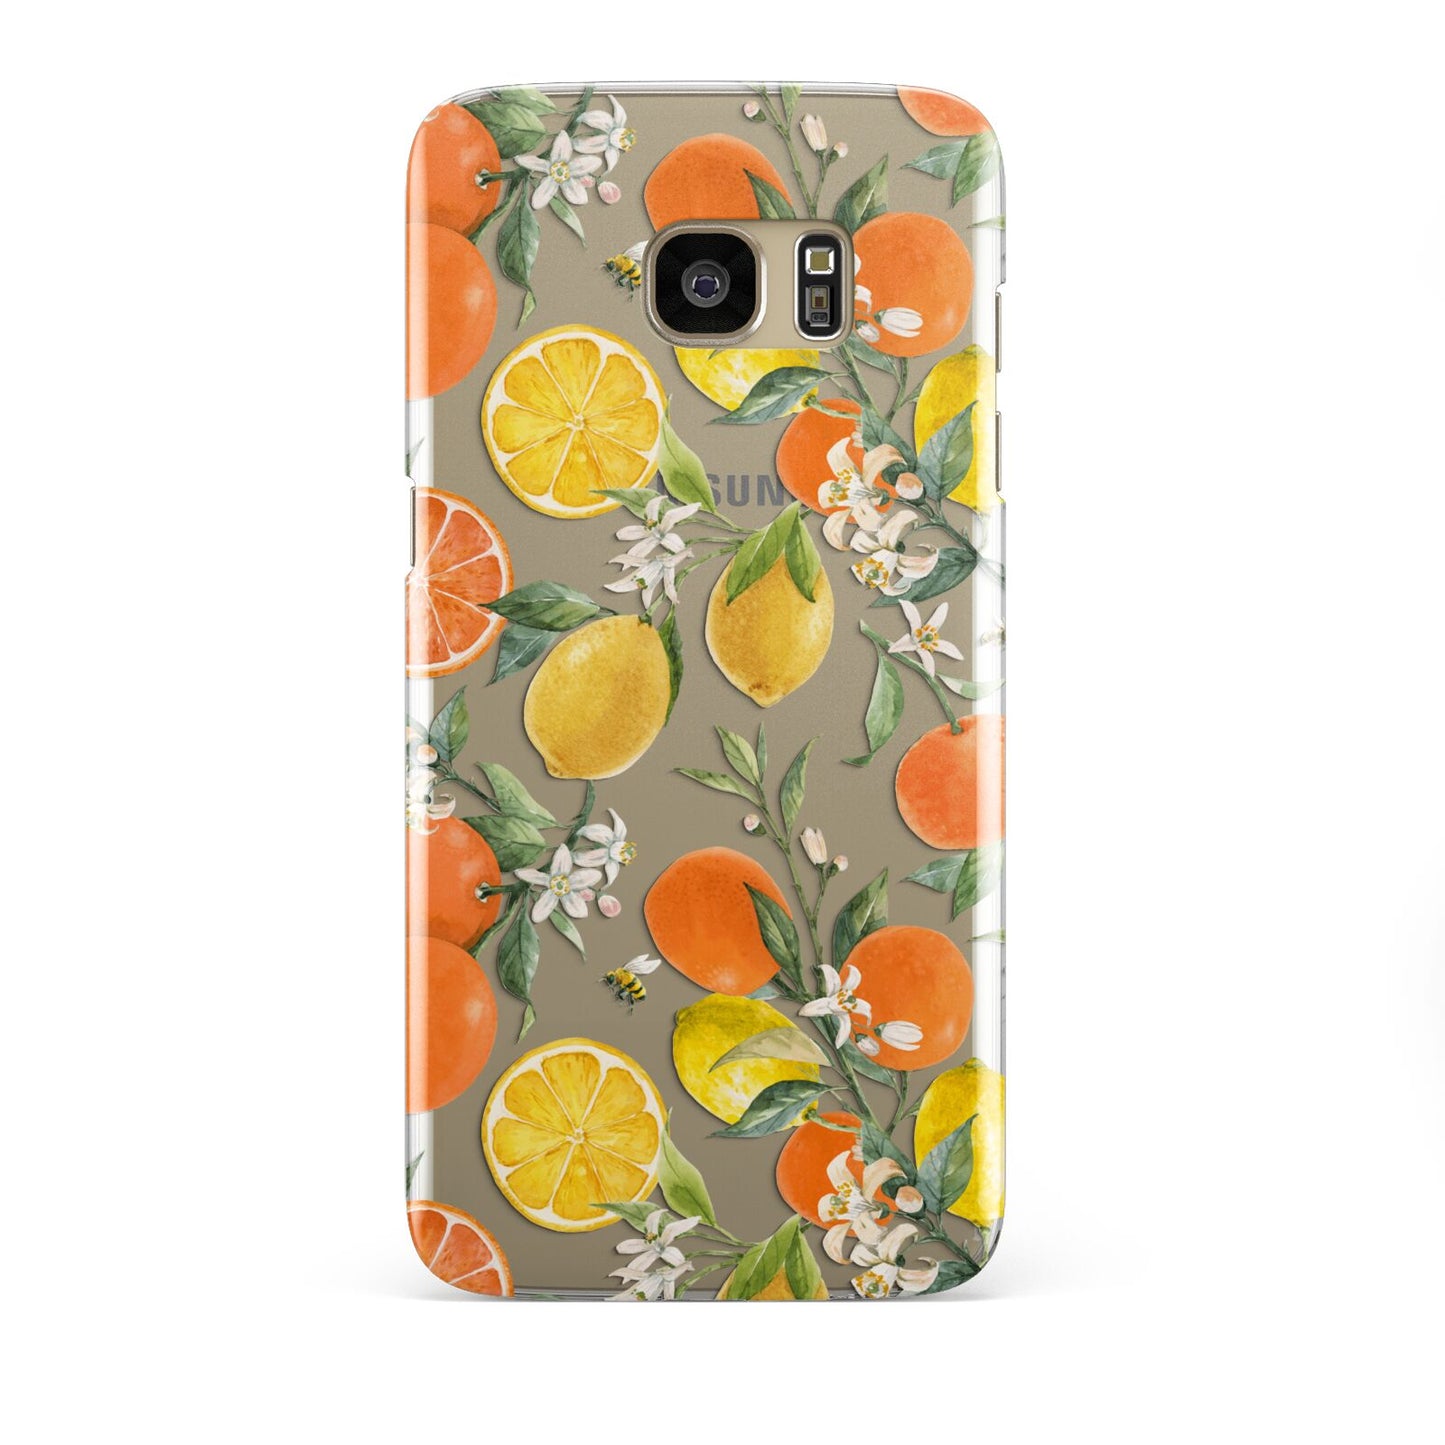 Lemons and Oranges Samsung Galaxy S7 Edge Case